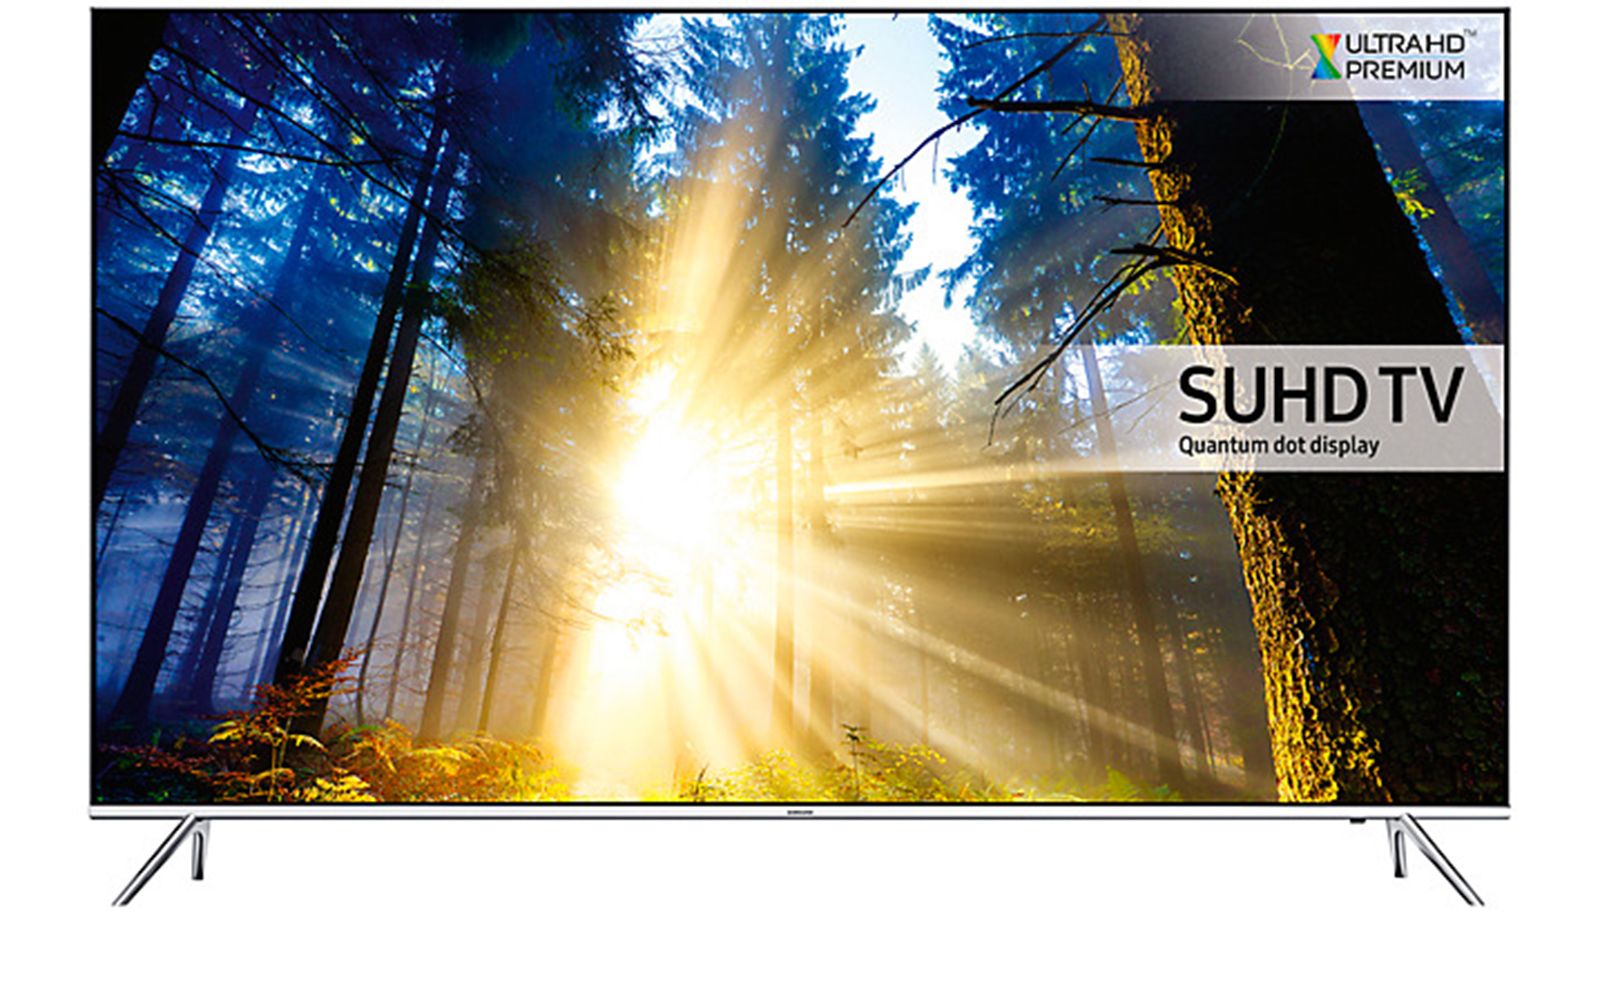 samsung 4k hdr tv choices for 2016 ks9000 ks8000 ks7500 and ks7000 compared image 3